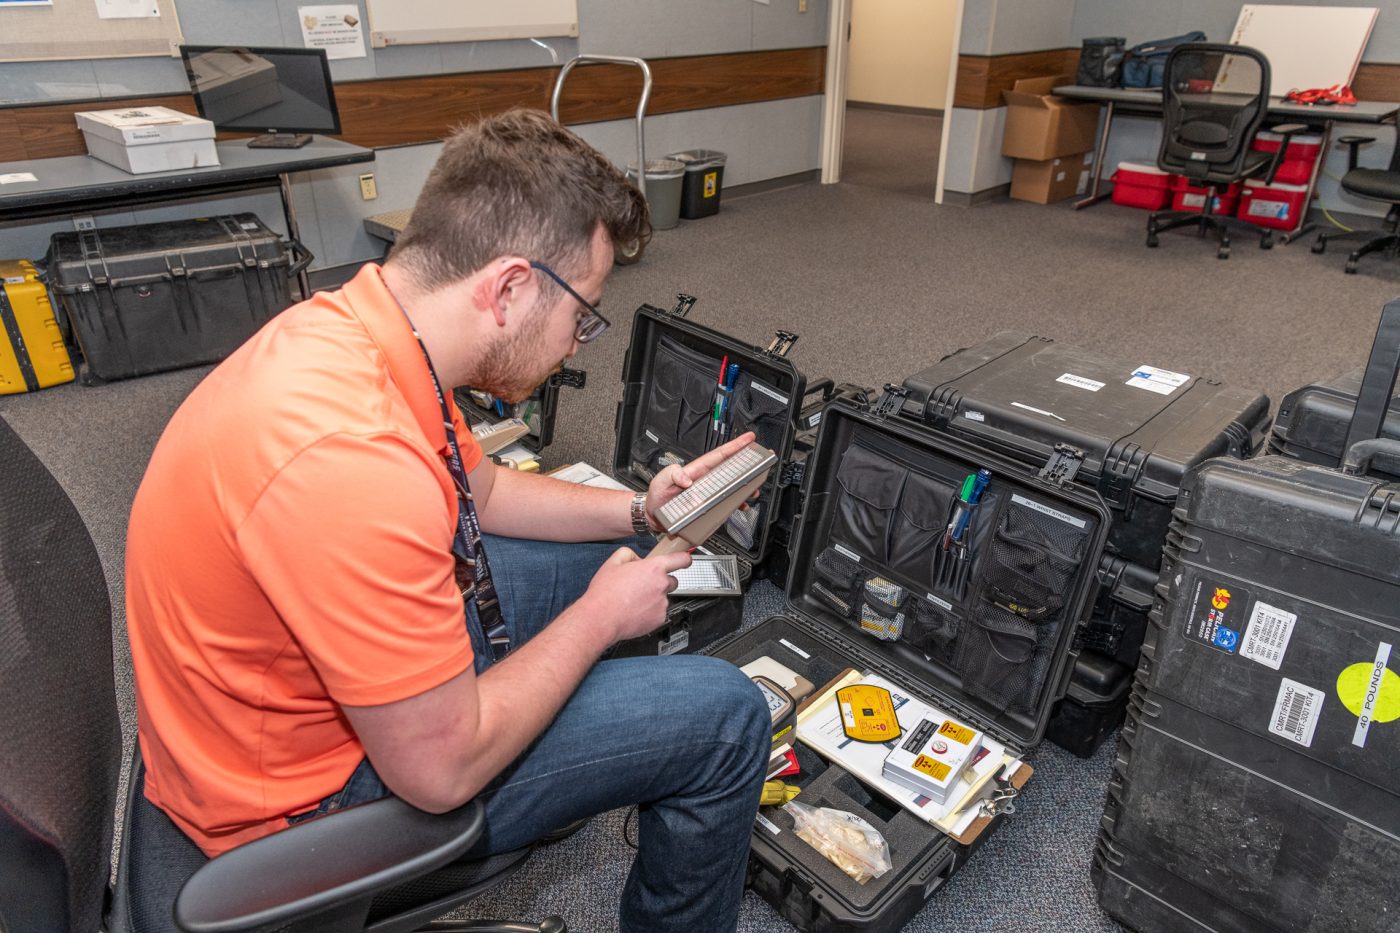 An RSL team member in an orange shirt prepares equipment for transportation.